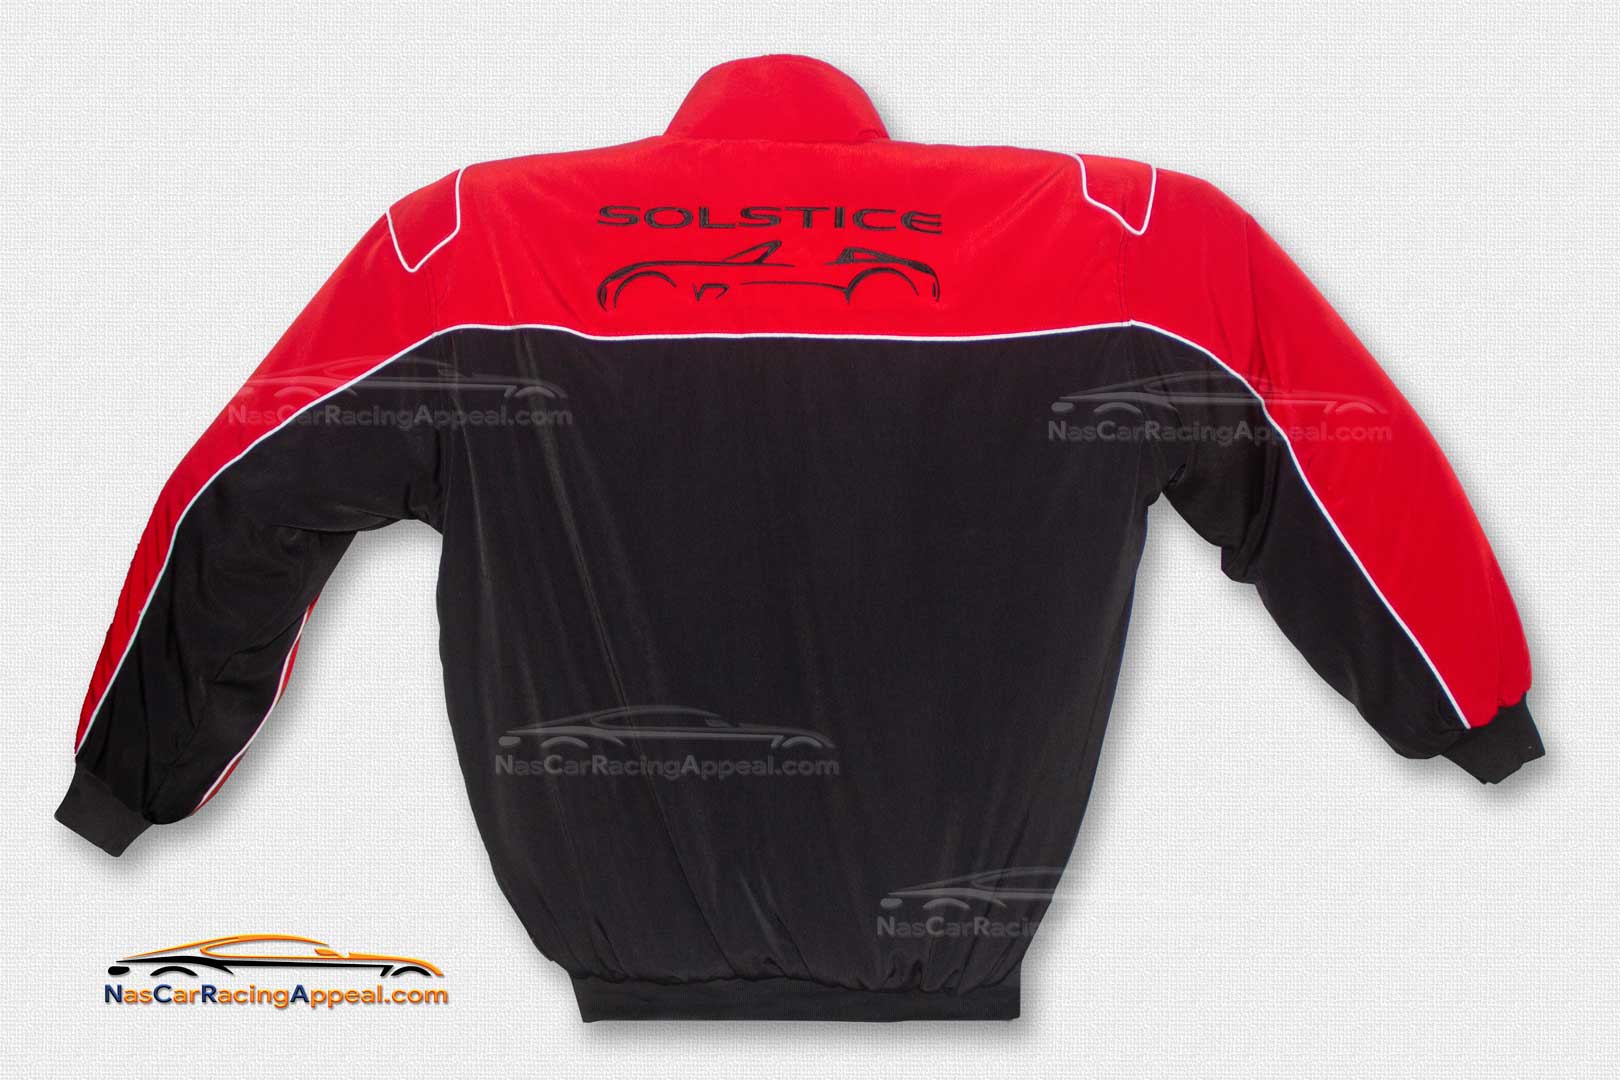 Pontiac Racing Jacket Red and Black Racing Jacket